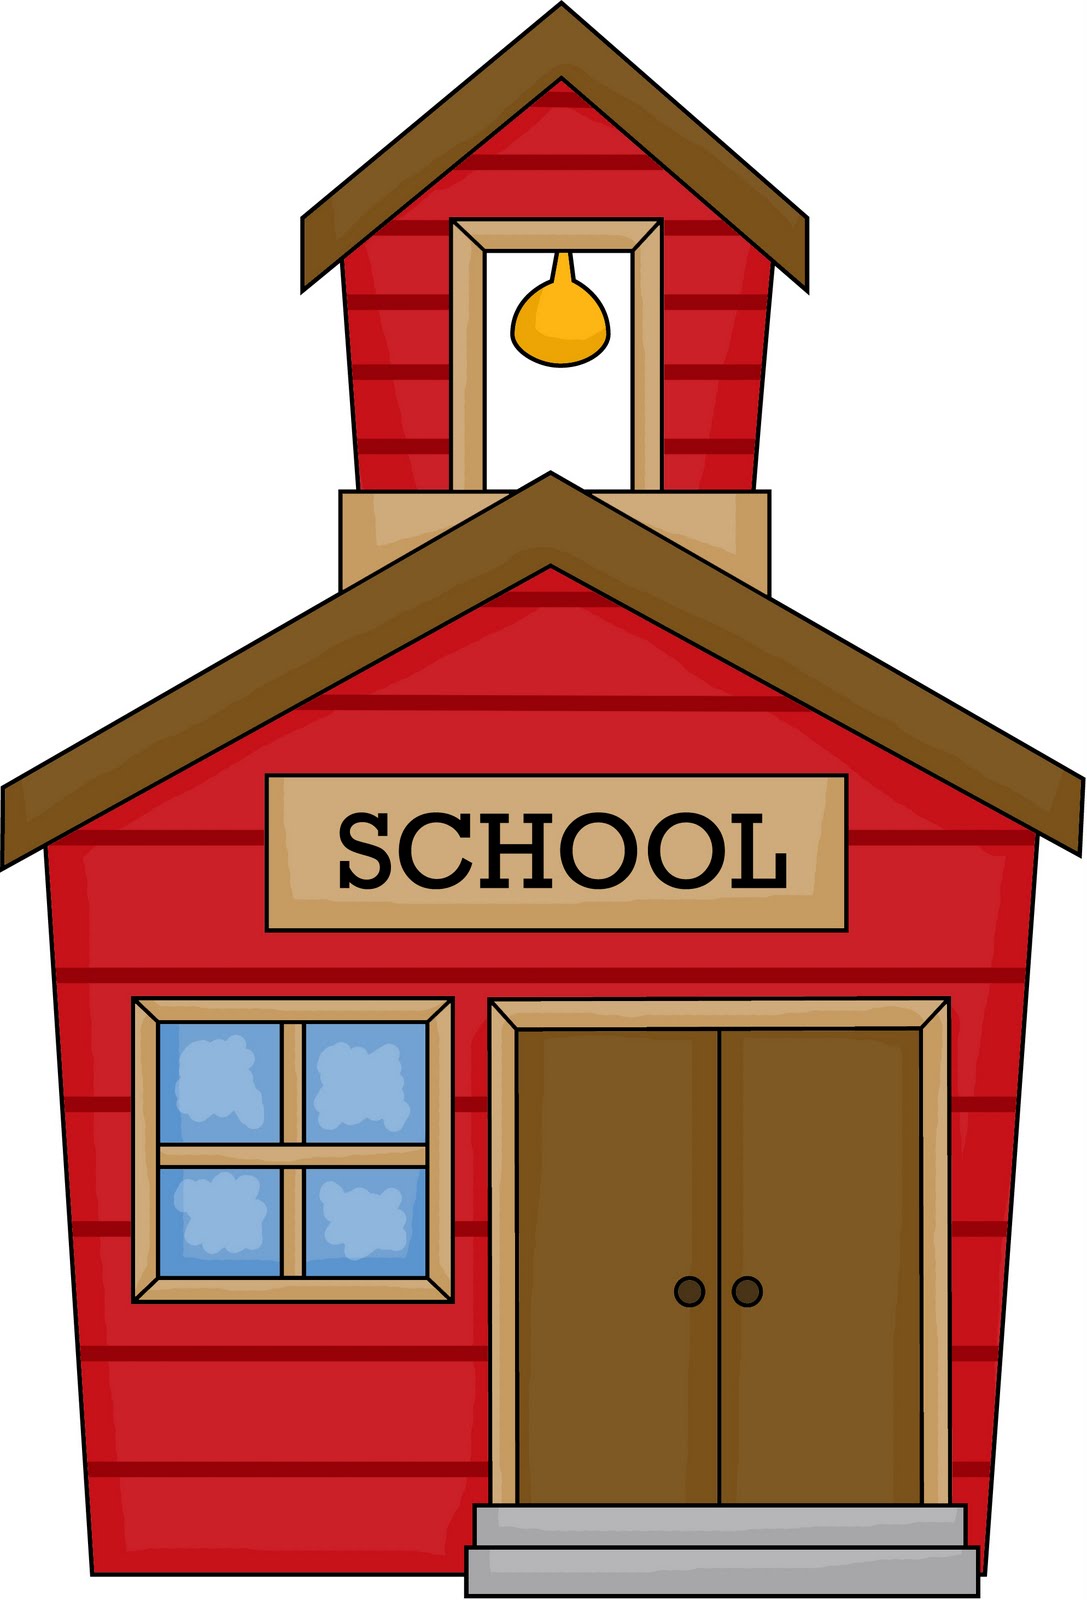 school house images - School Images Clipart